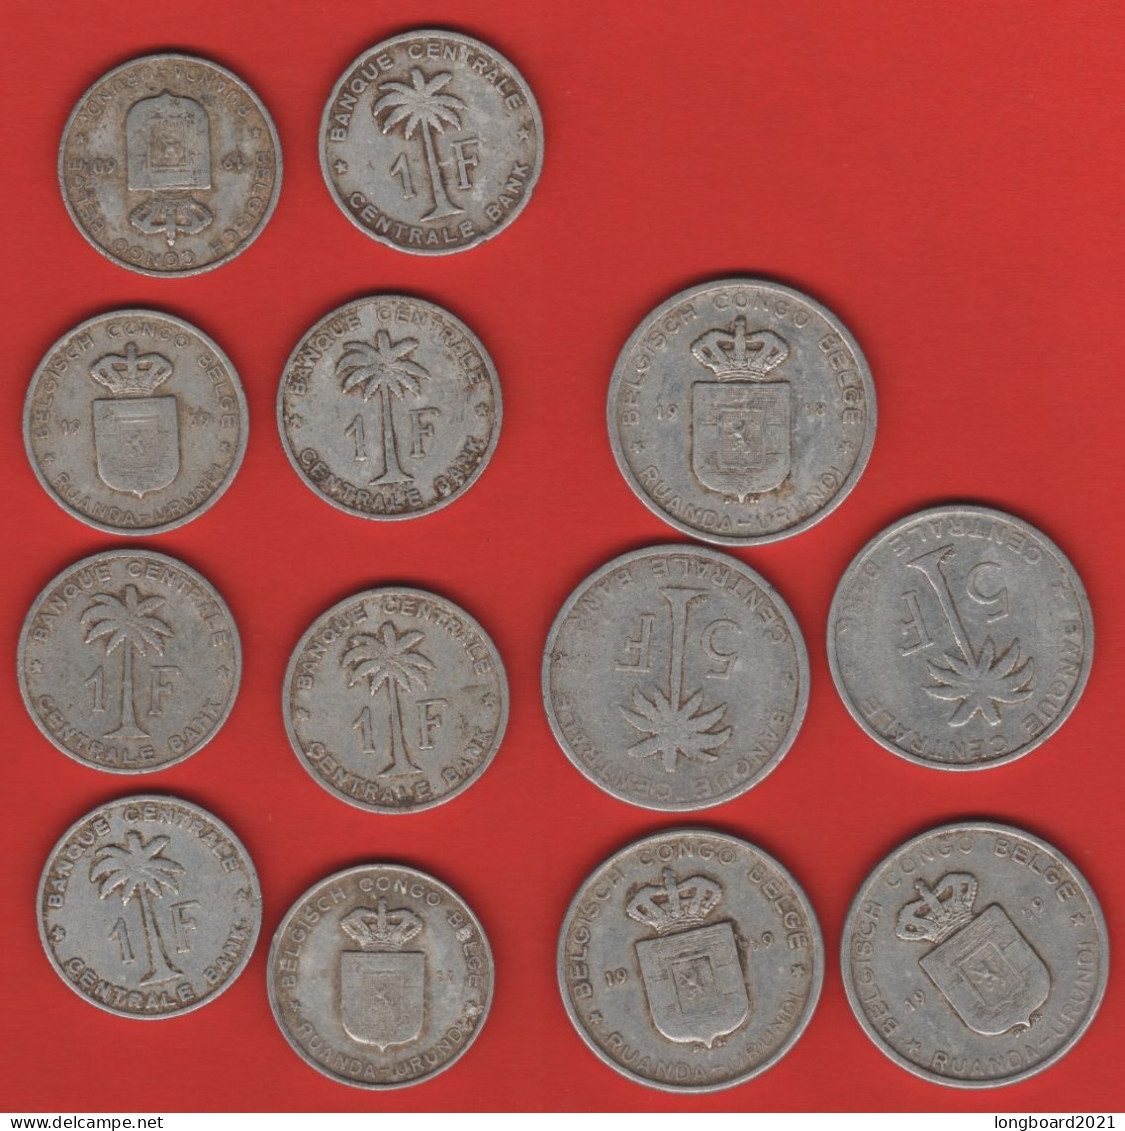 RUANDA-URUNDI - LOT 13 COINS 1,5 FRANCS 1957-1960 - 1951-1960: Baudouin I